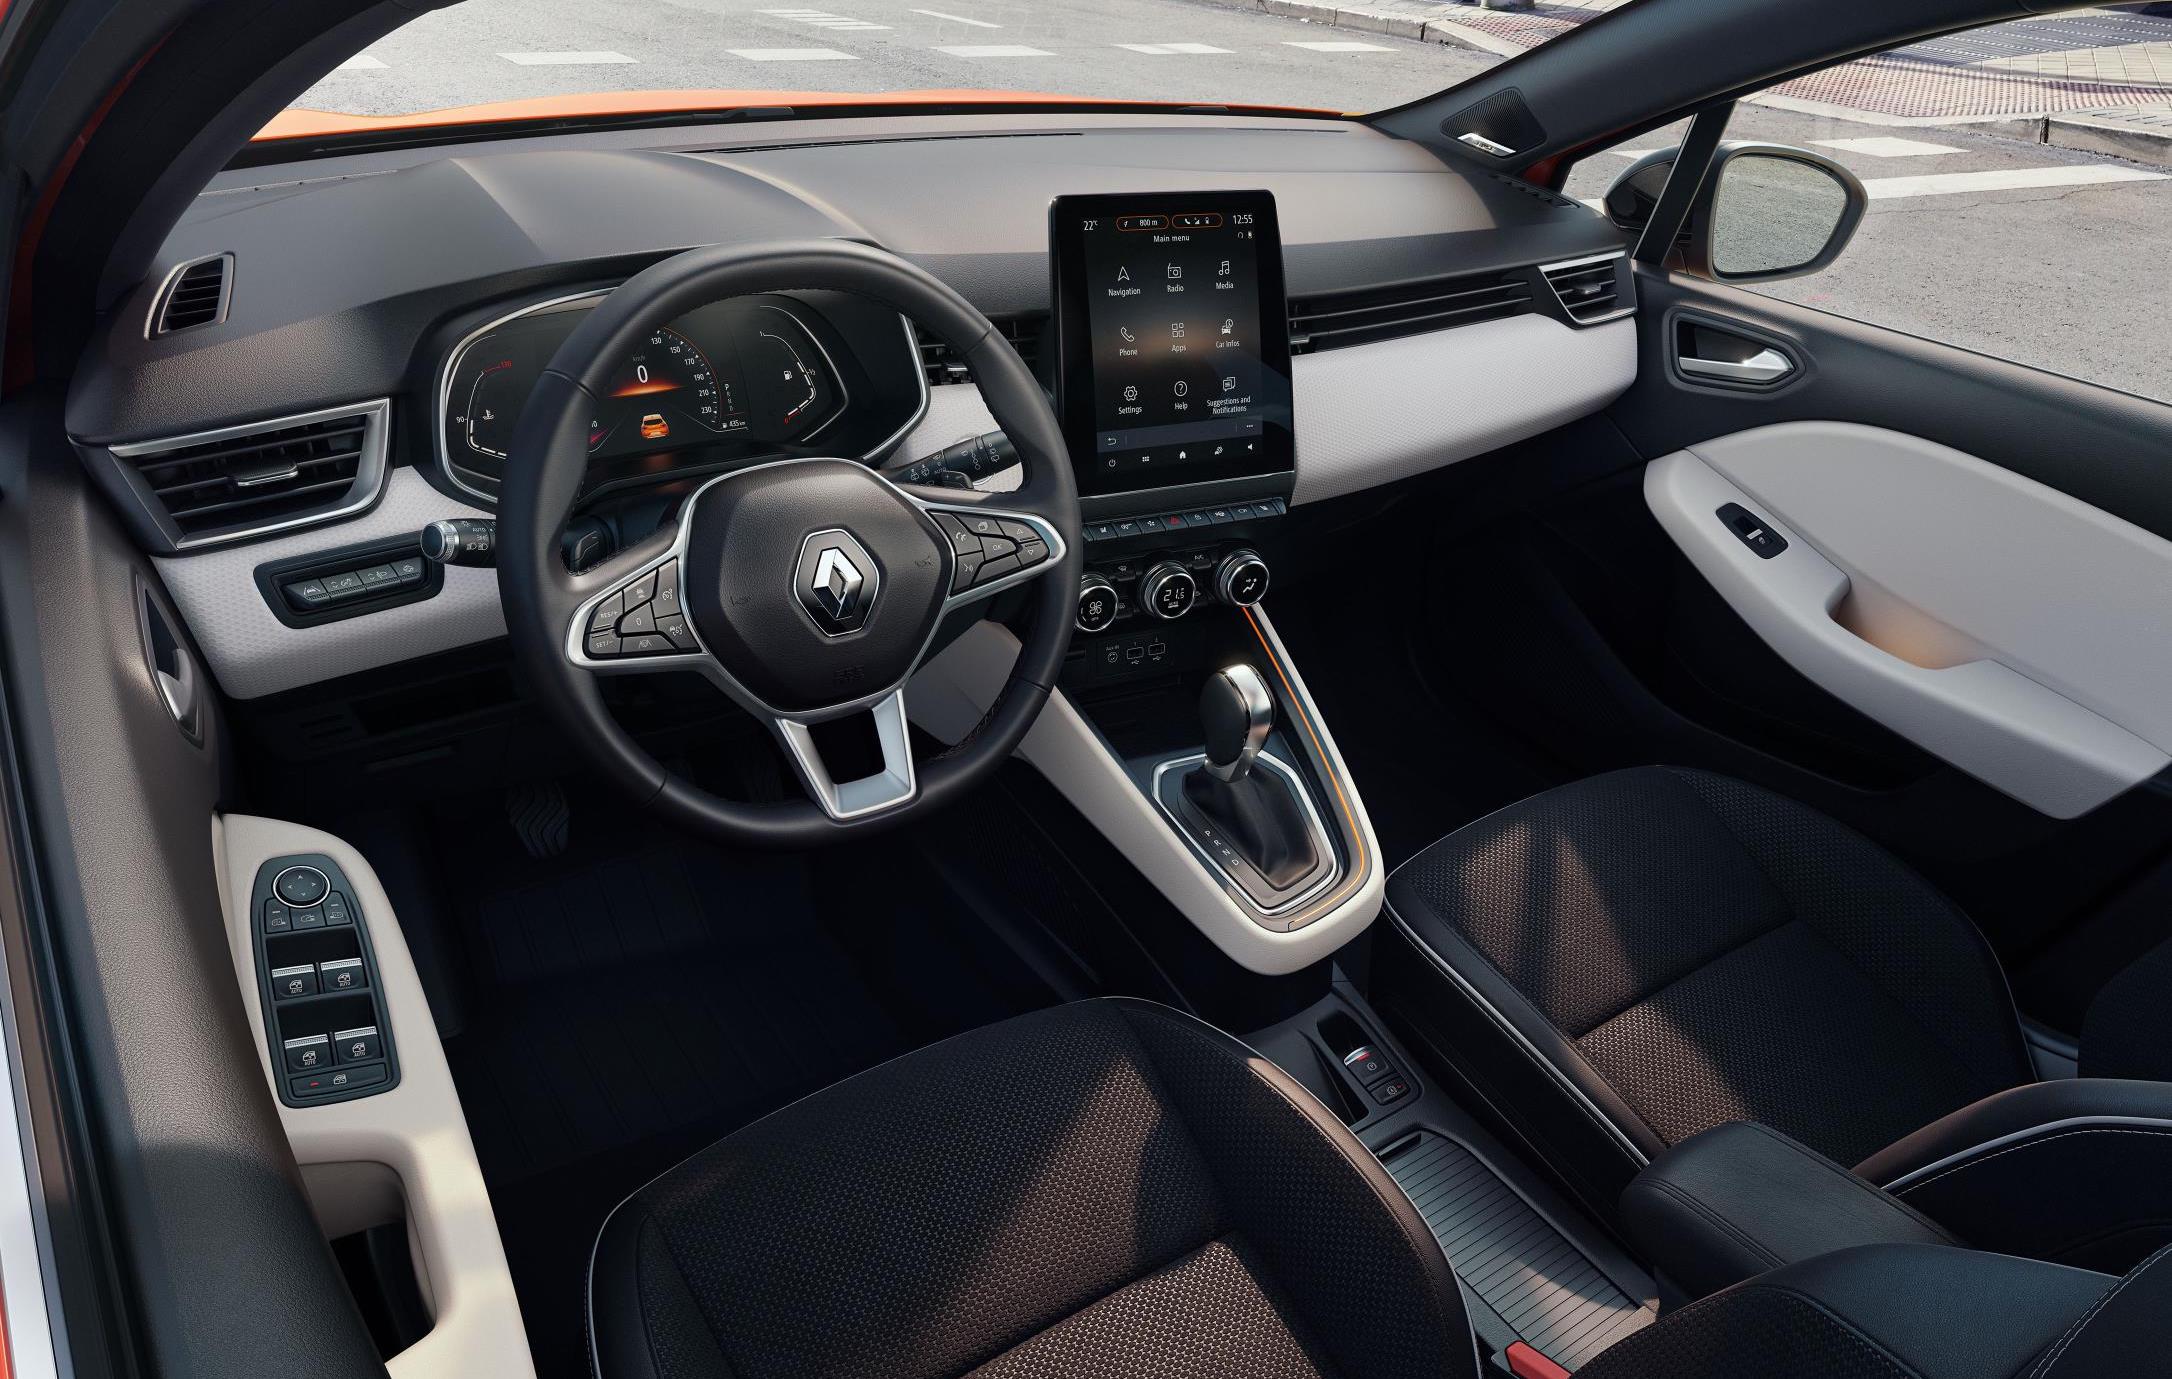 2019 Renault Clio interior goes big on technology